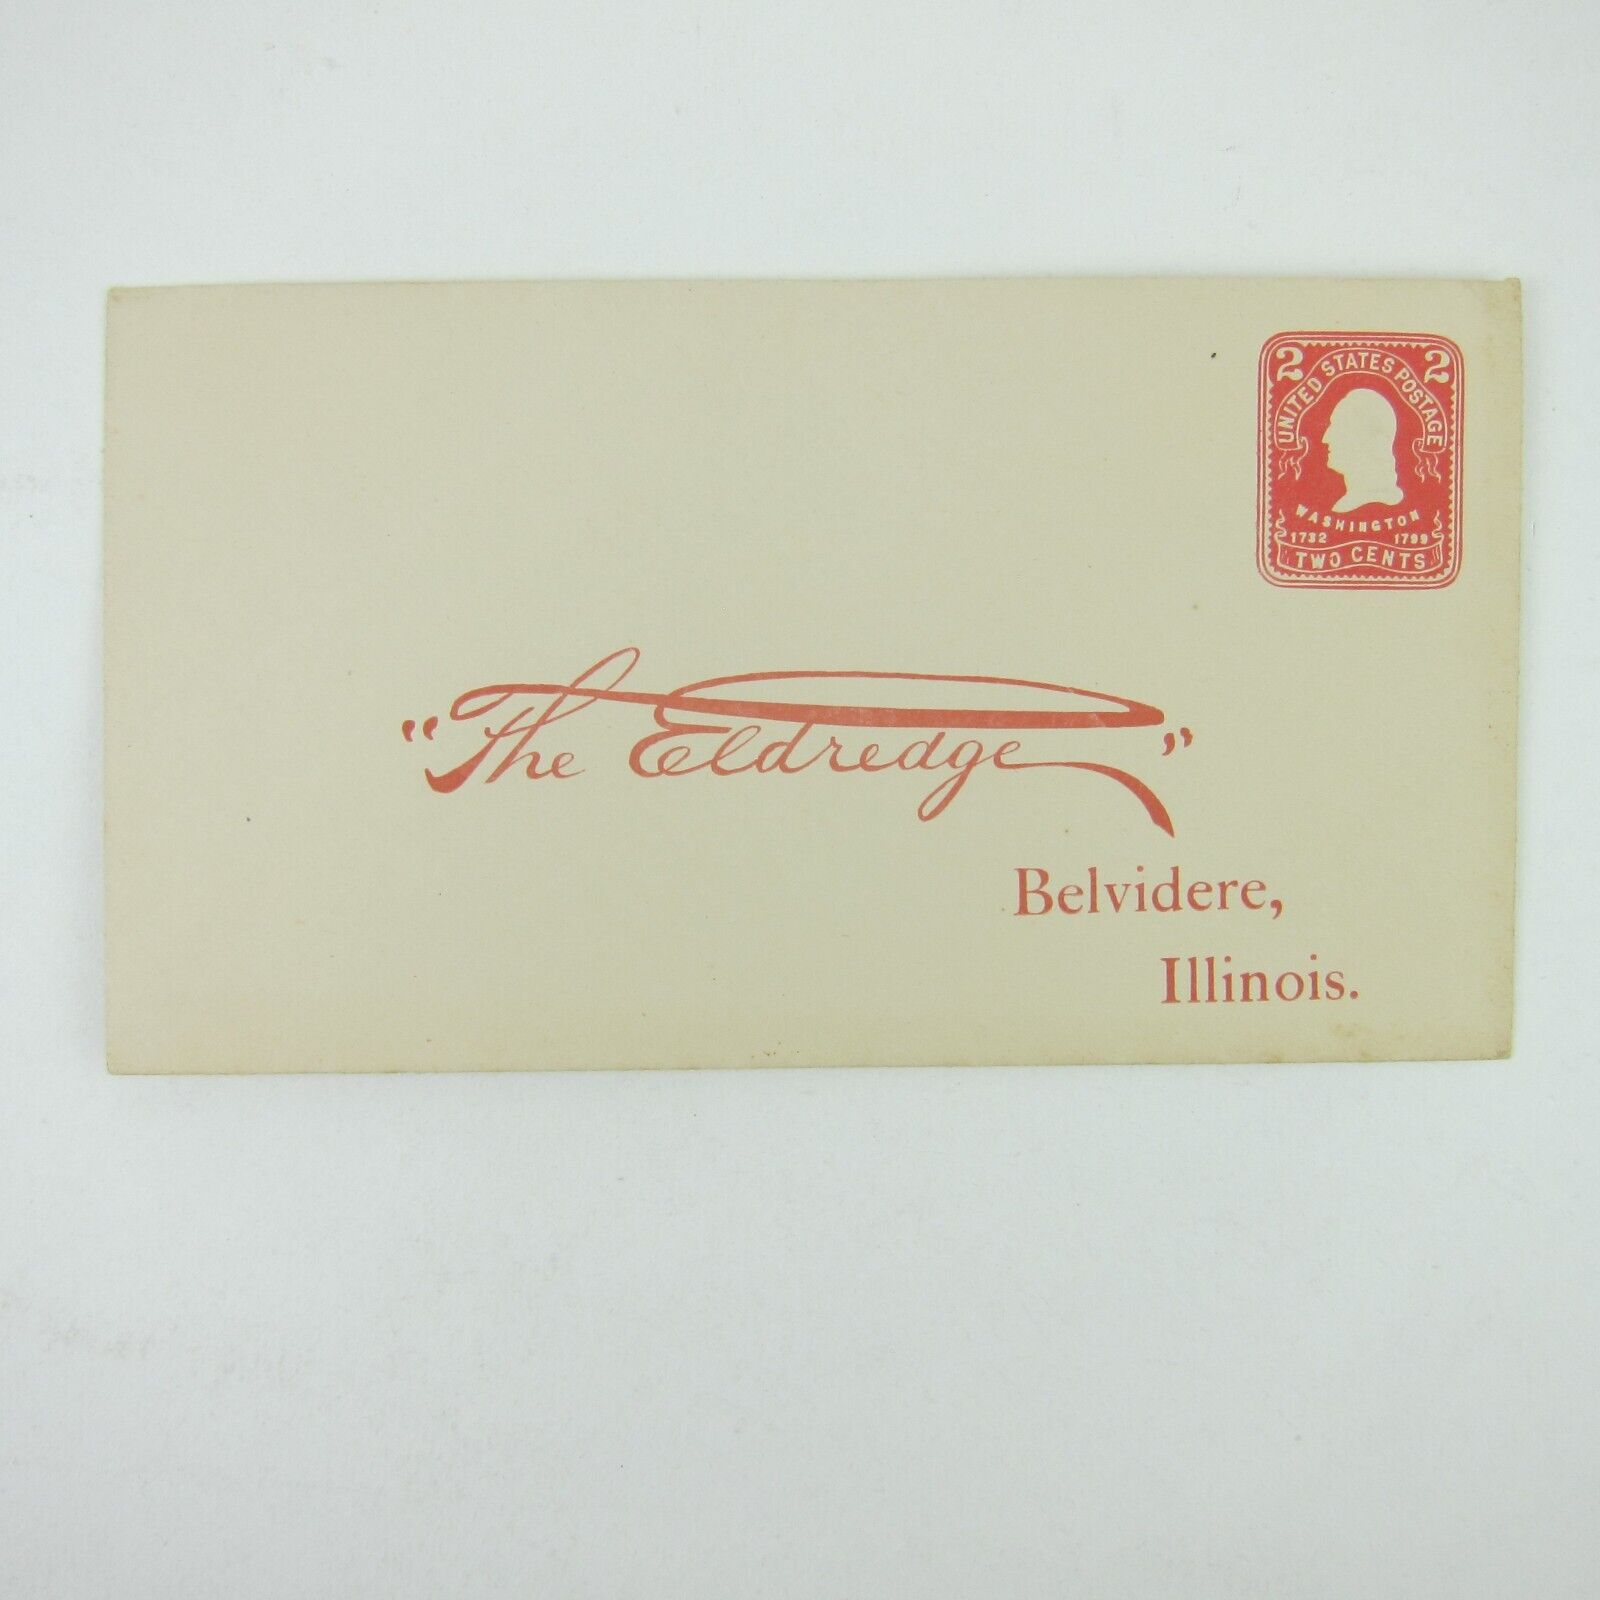 US Postal Stationery The Eldredge Belvidere Illinois 2 cent Washington Antique